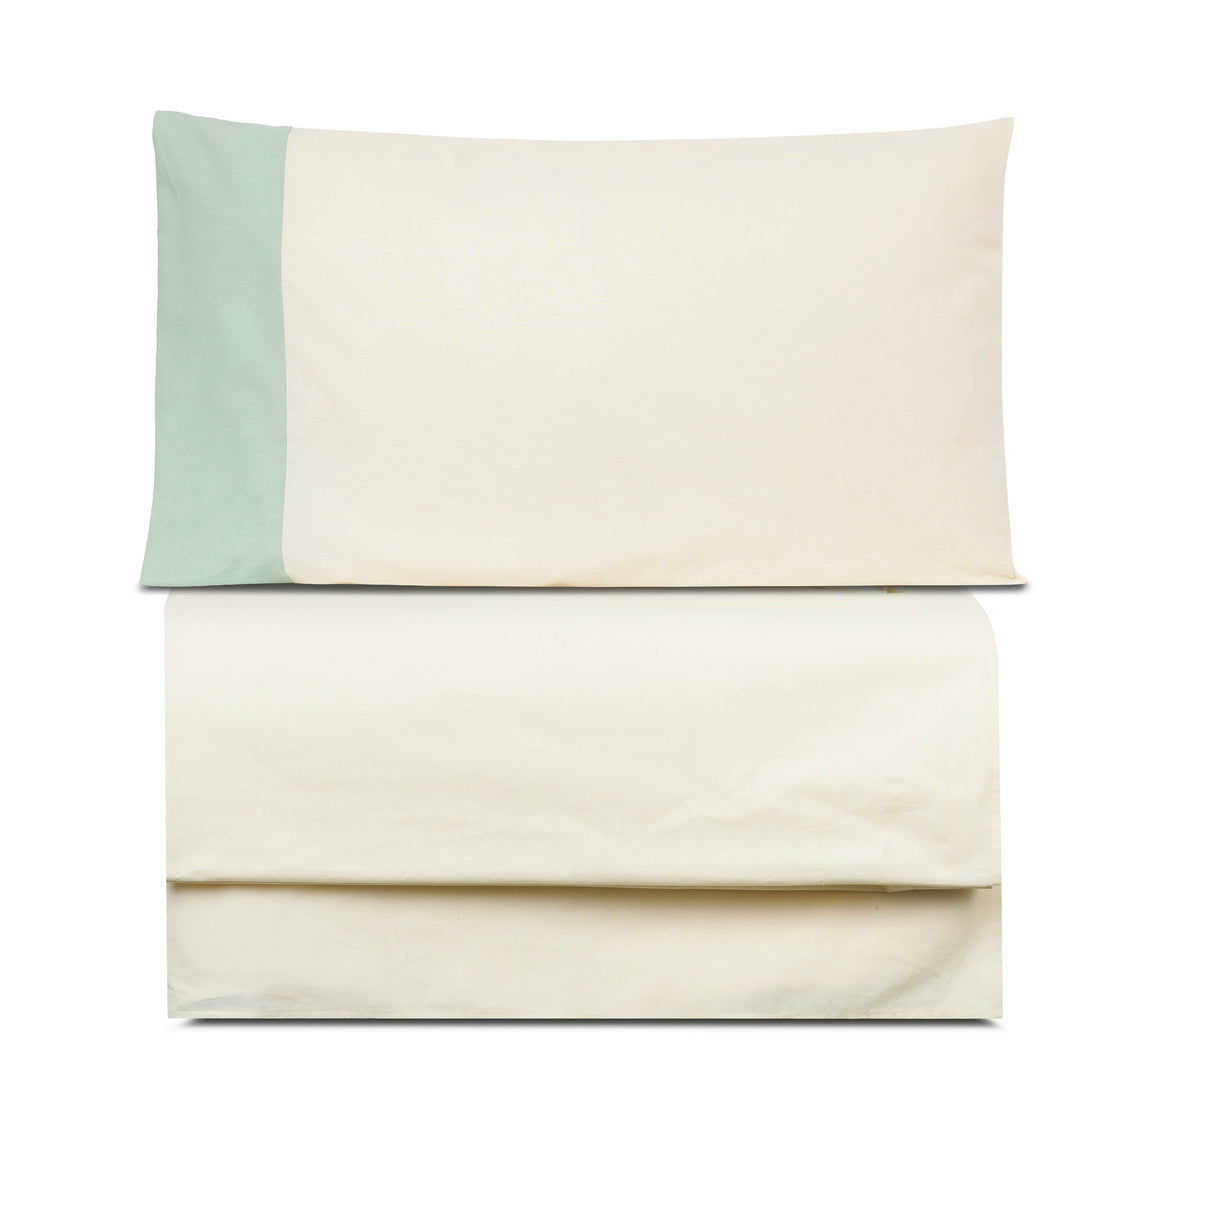 Solid colour bedsheet set